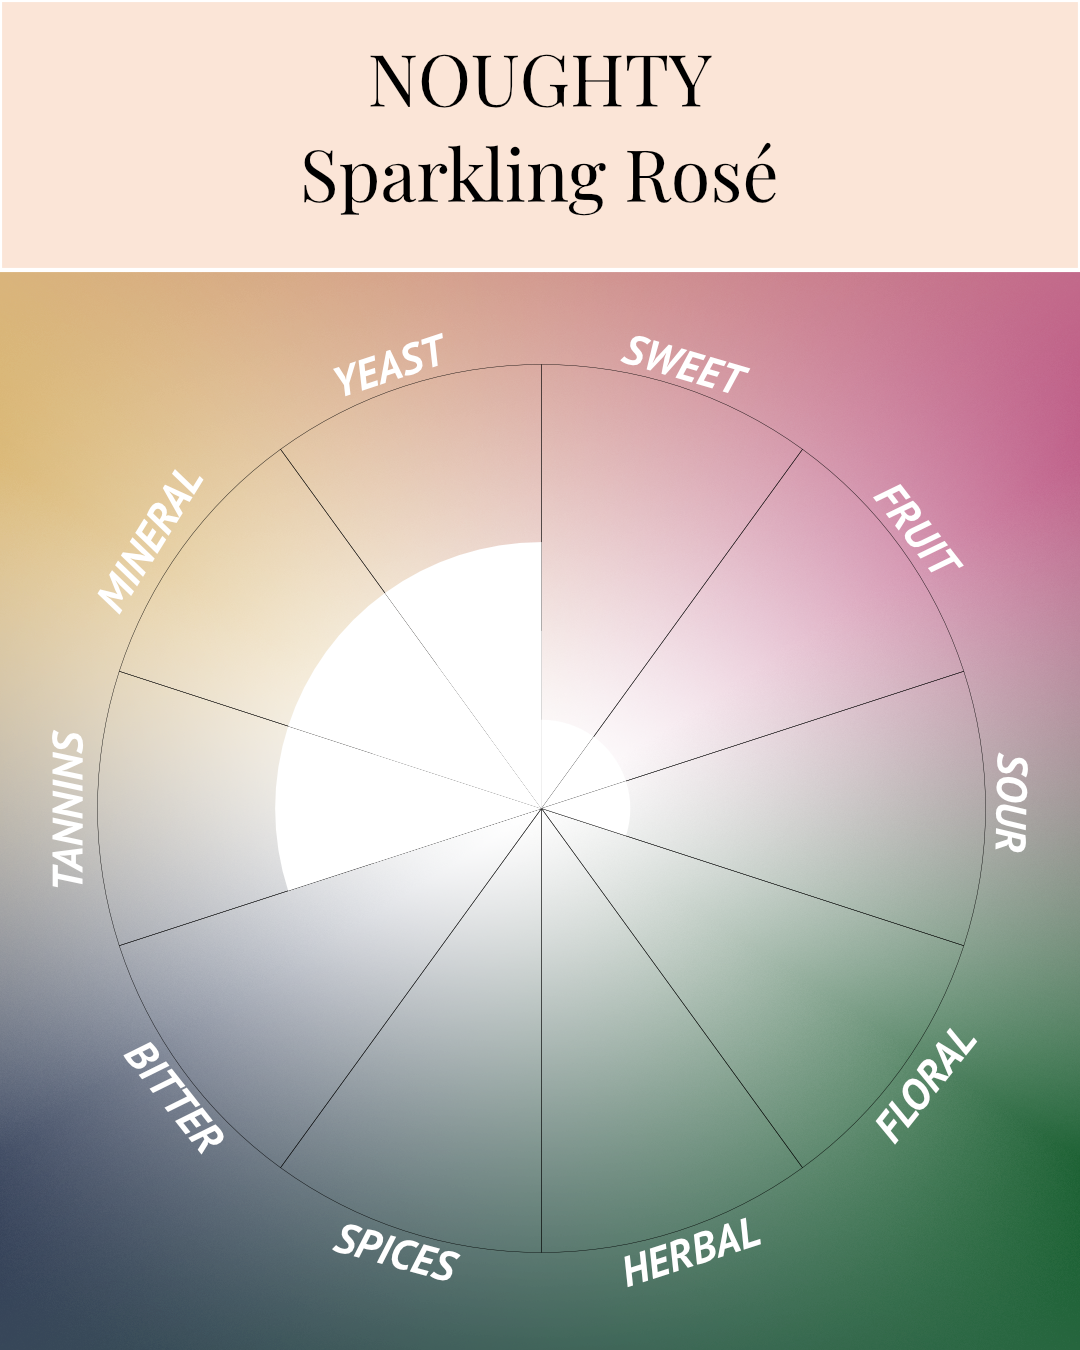 Noughty Sparkling Rosé